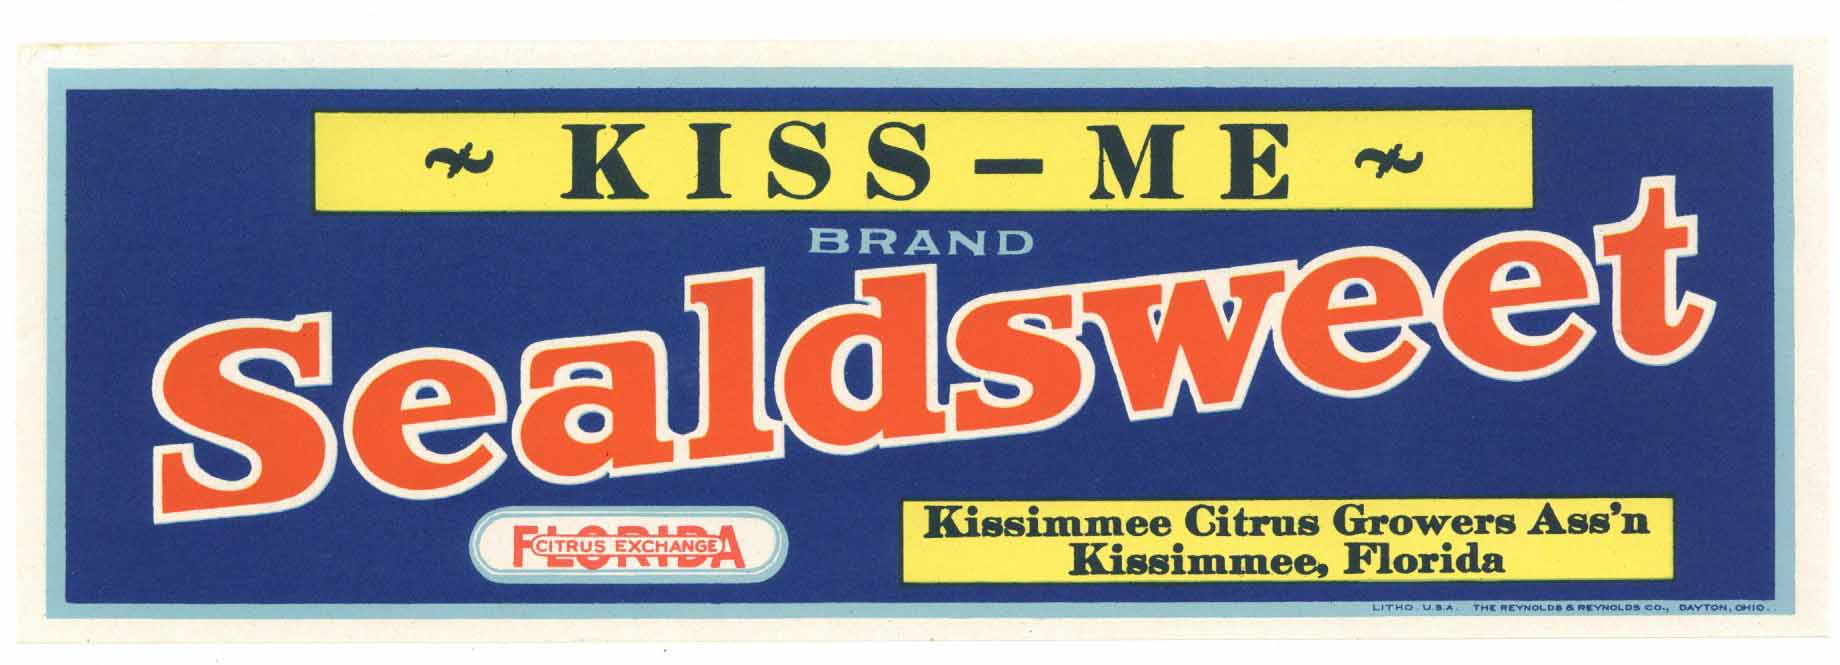 Kiss Me Brand Vintage Kissimmee Florida Citrus Crate Label, Sealdsweet